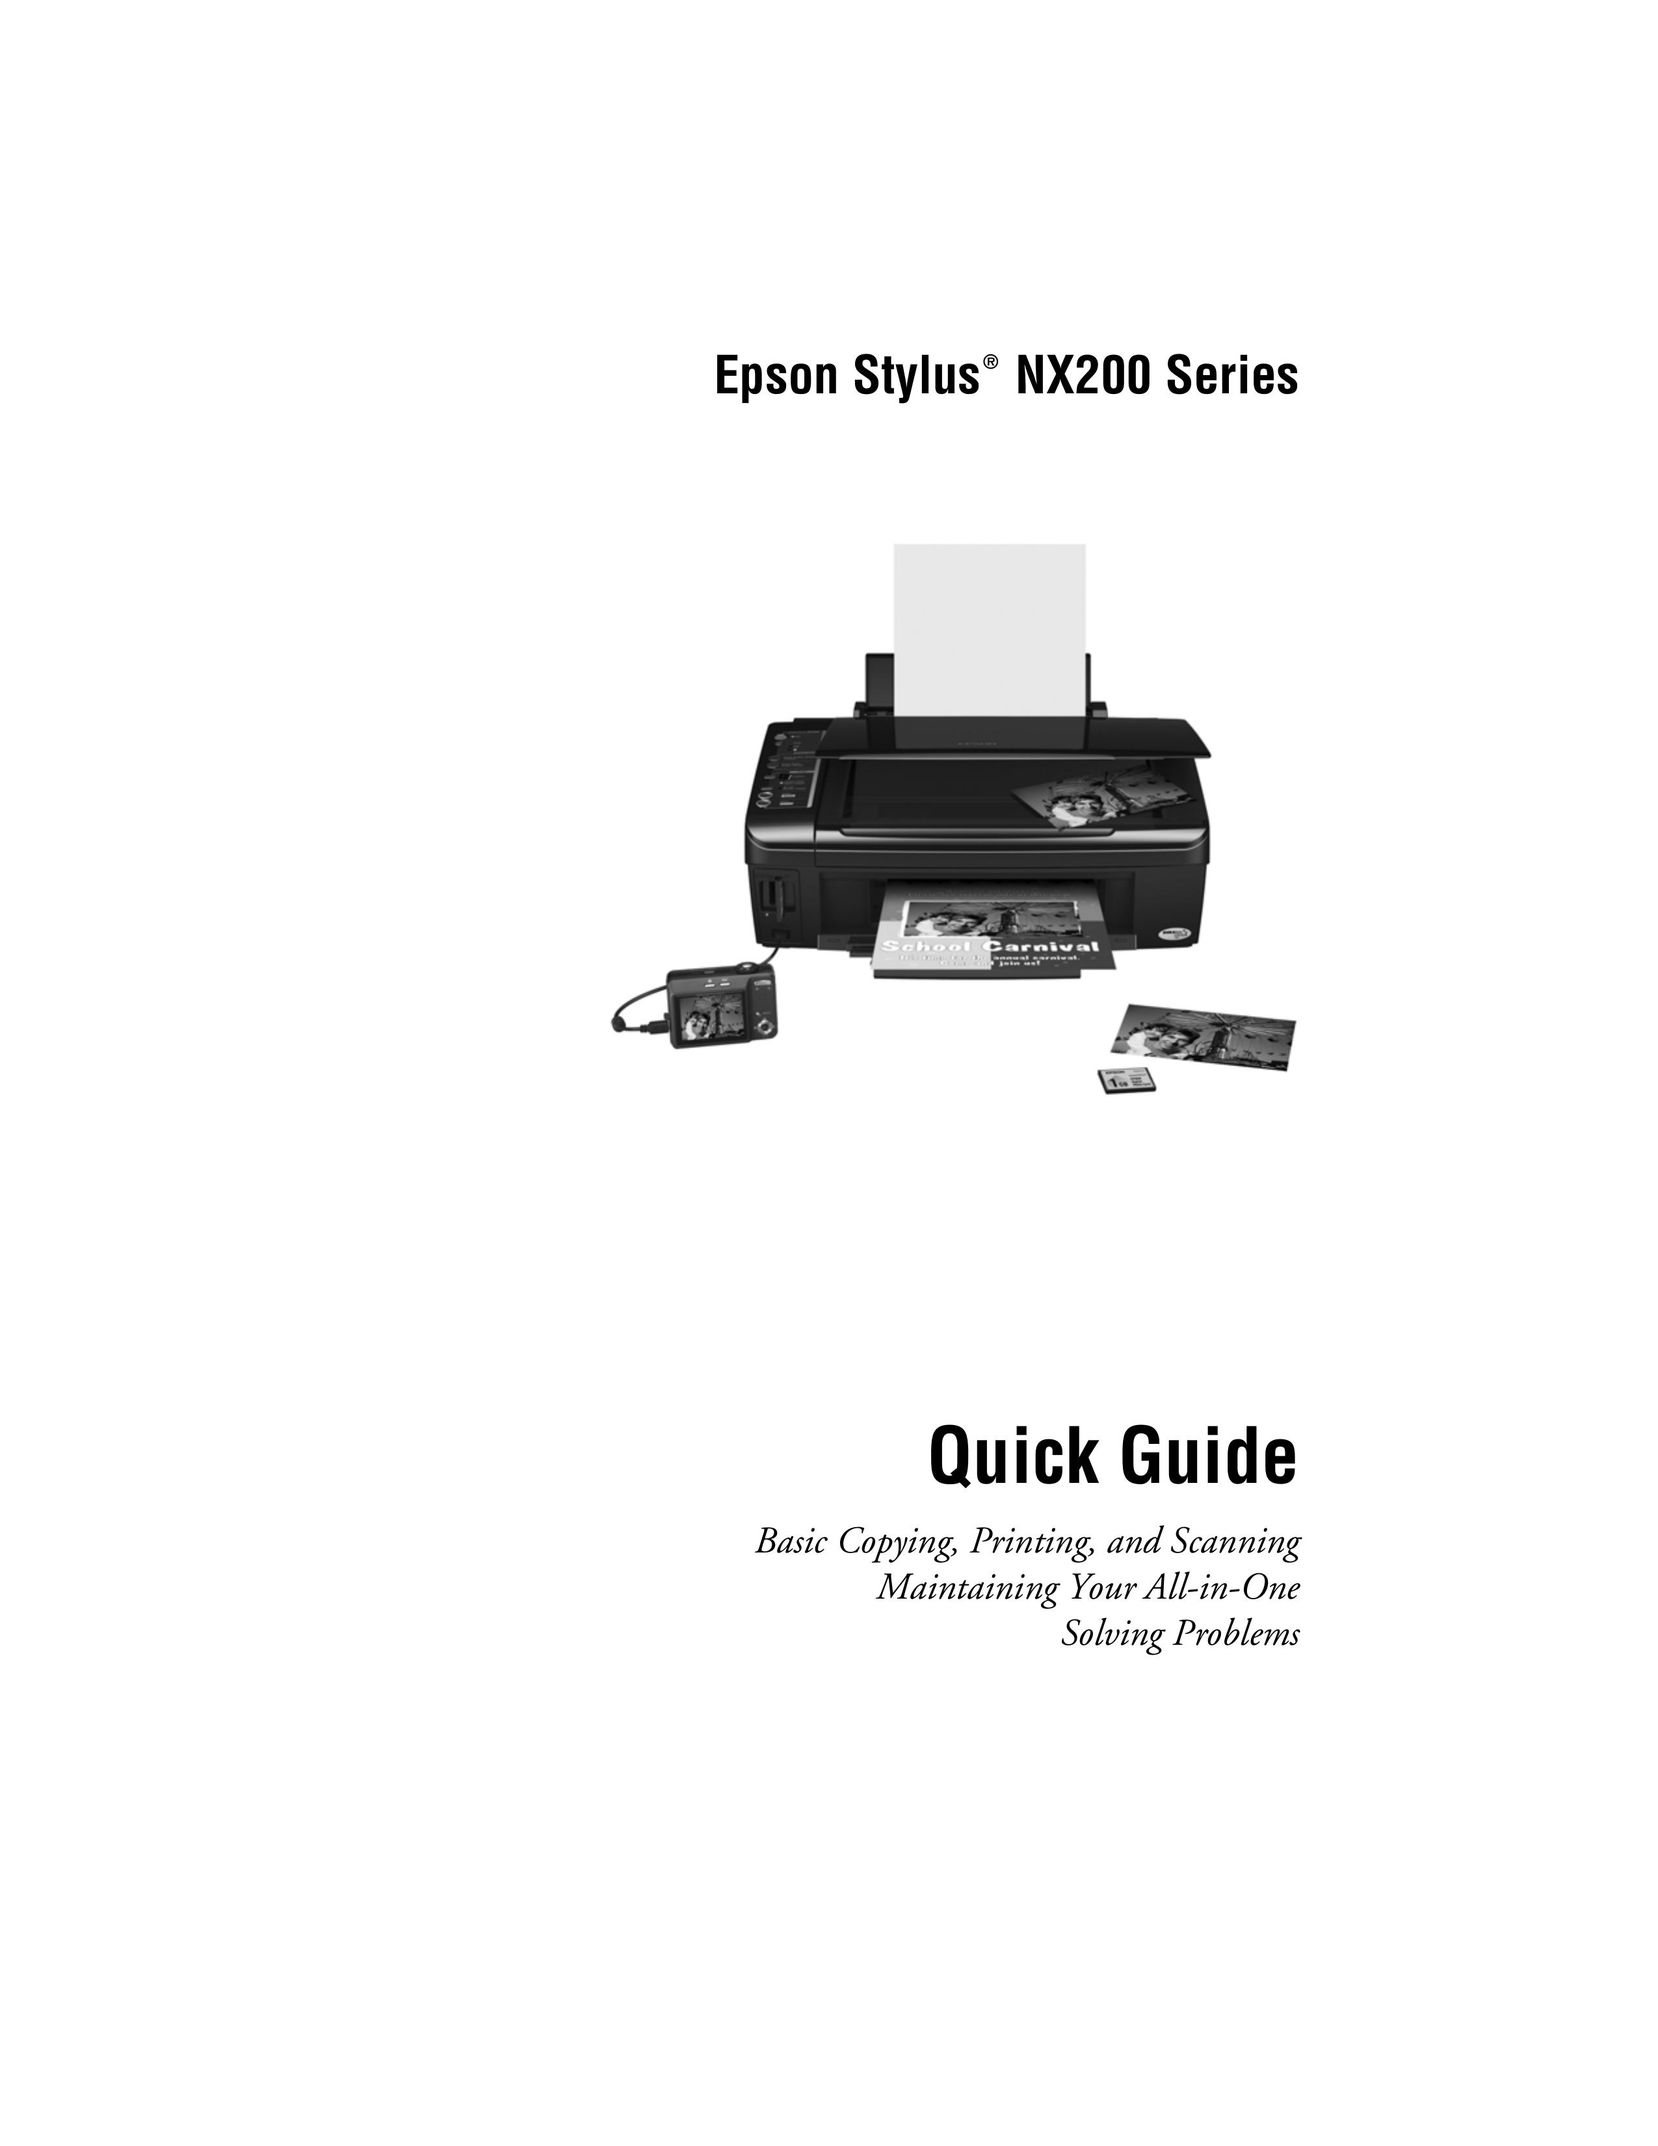 Garmin NX200 All in One Printer User Manual